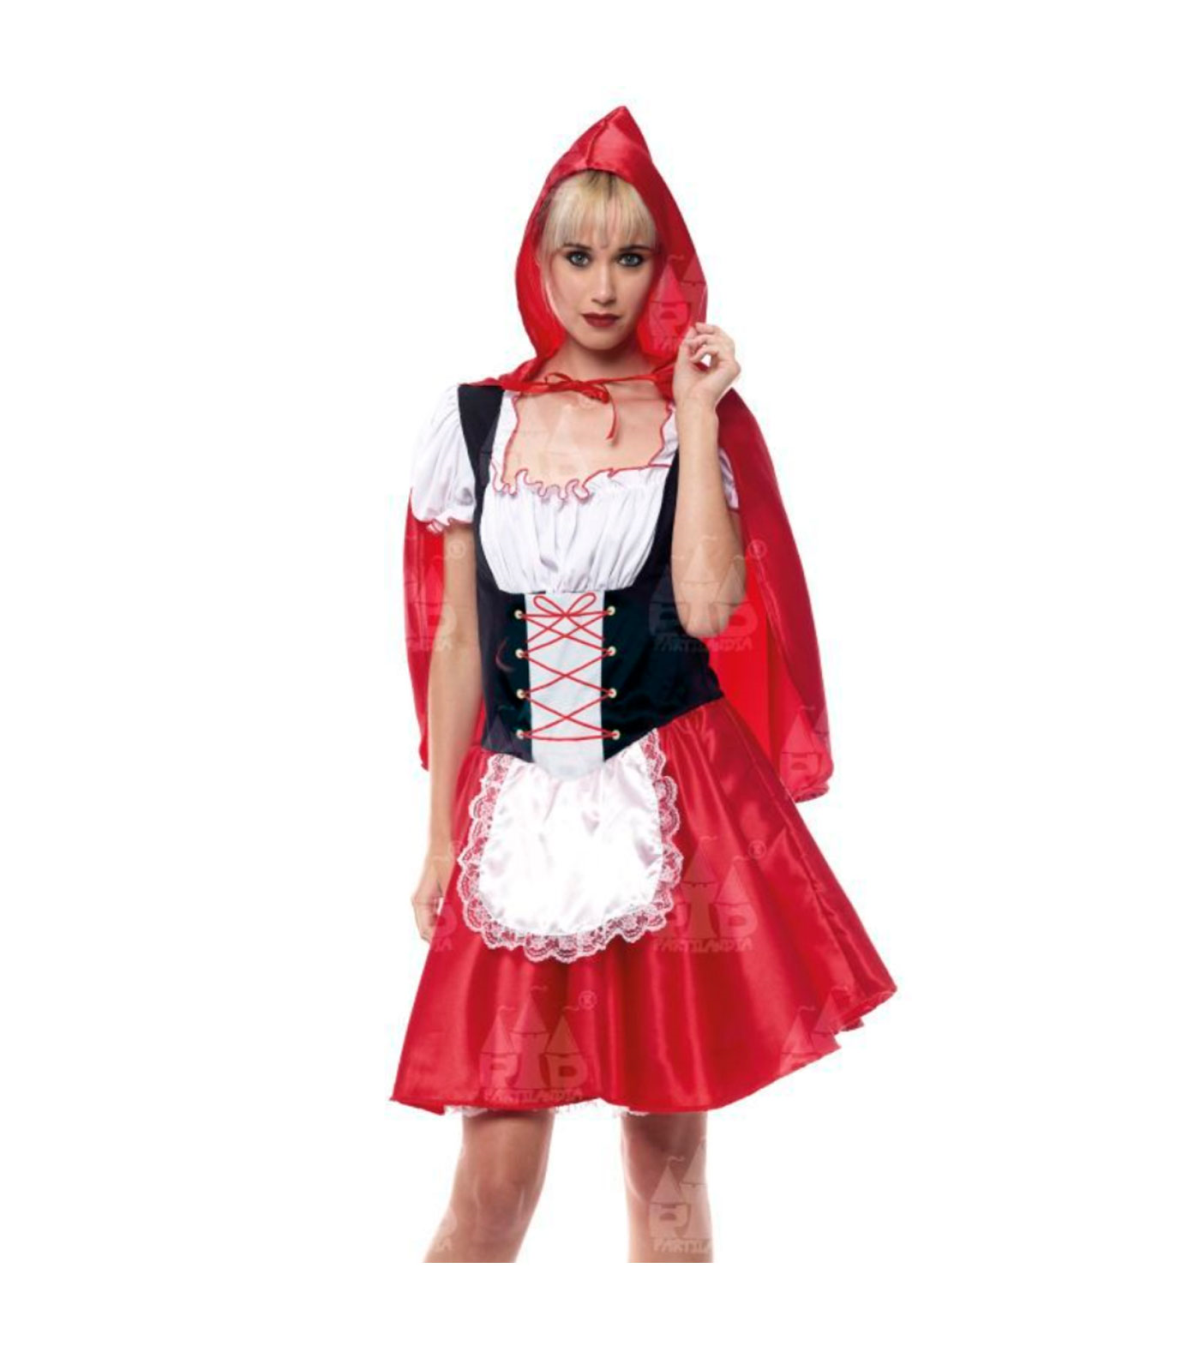 Disfraz Caperucita Roja, Disfraces Halloween